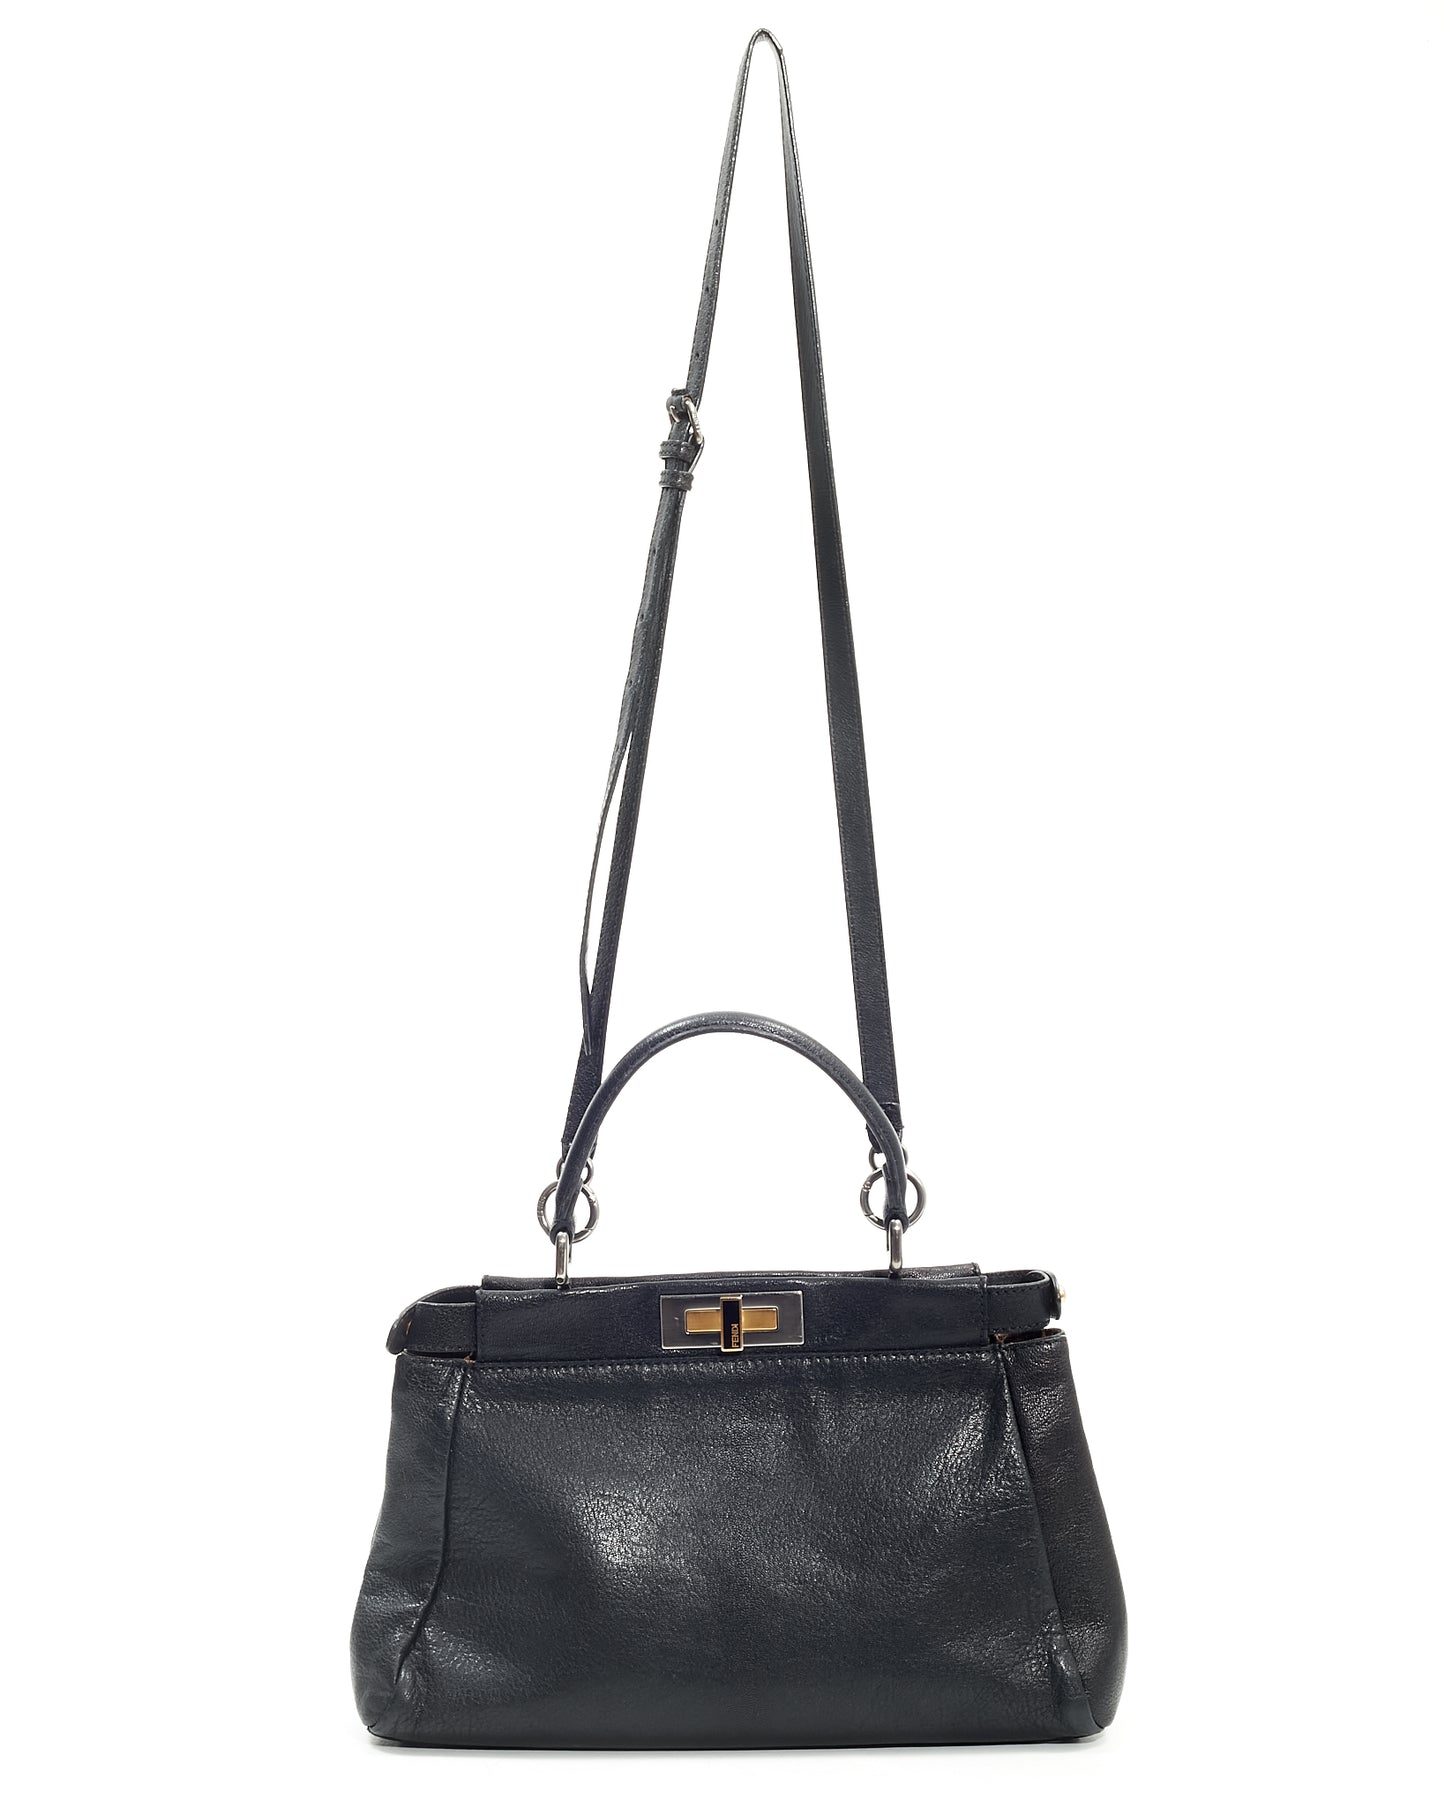 Fendi Black Leather Peekaboo Top Handle Bag